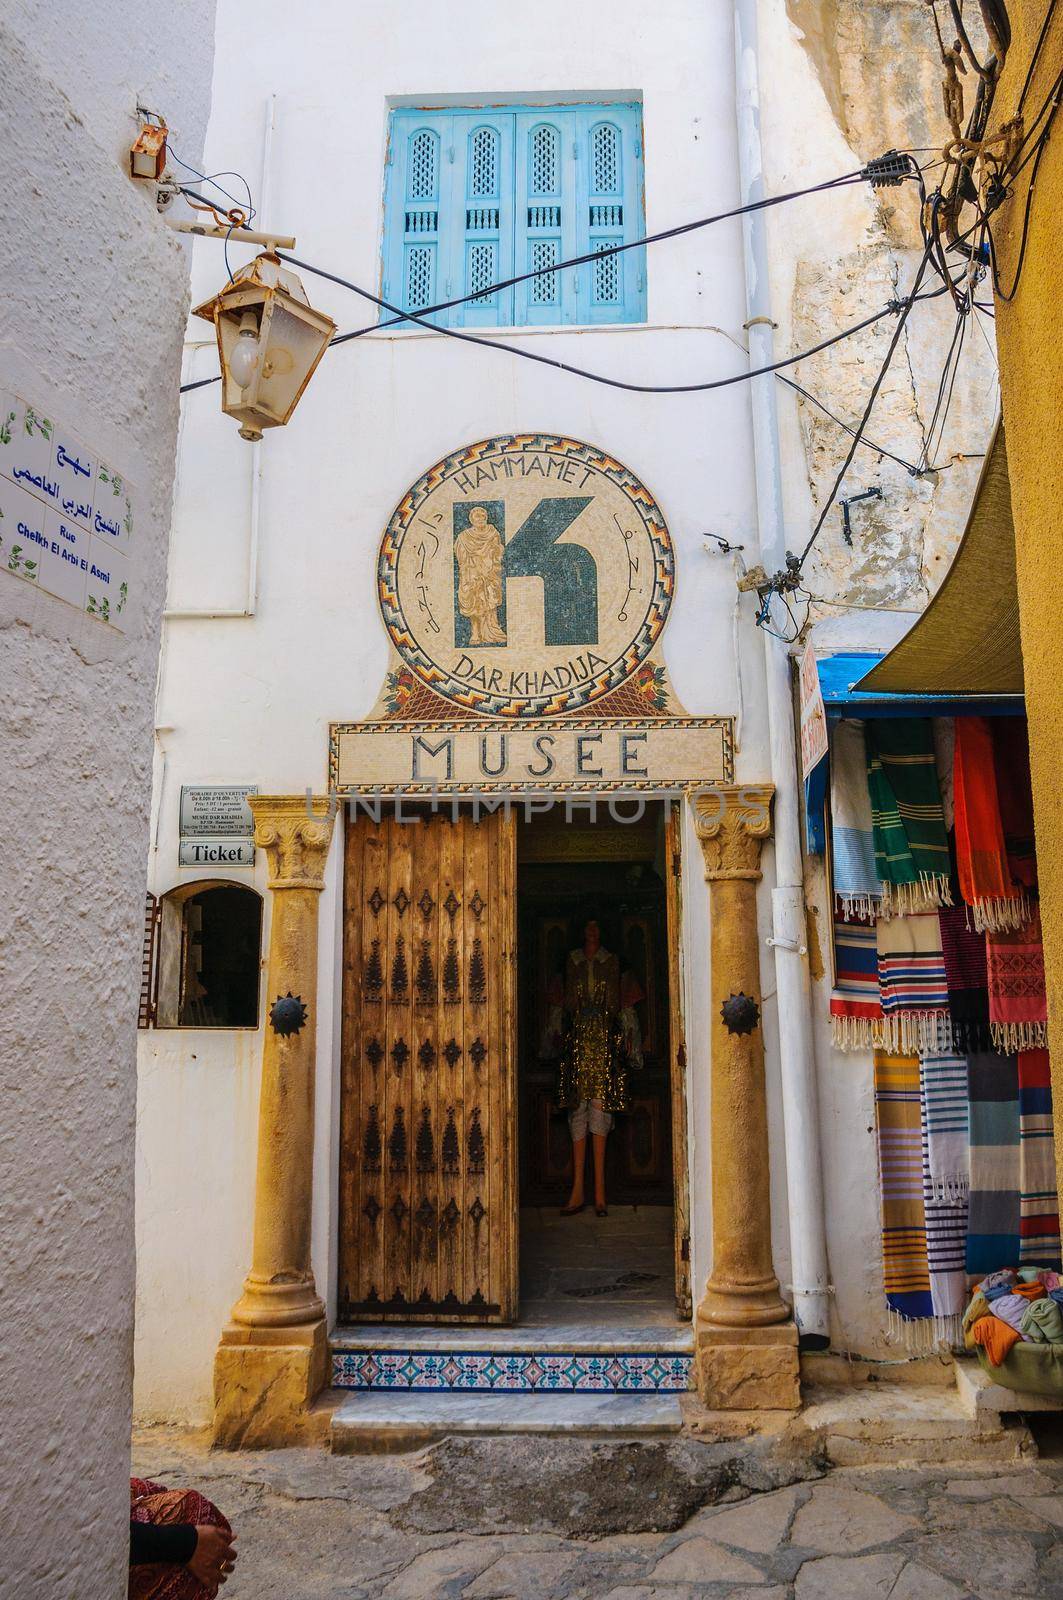 HAMMAMET, TUNISIA - Oct 2014: Museum in narrow street of Medina on October 6, 2014 in Hammamet, Tunisia